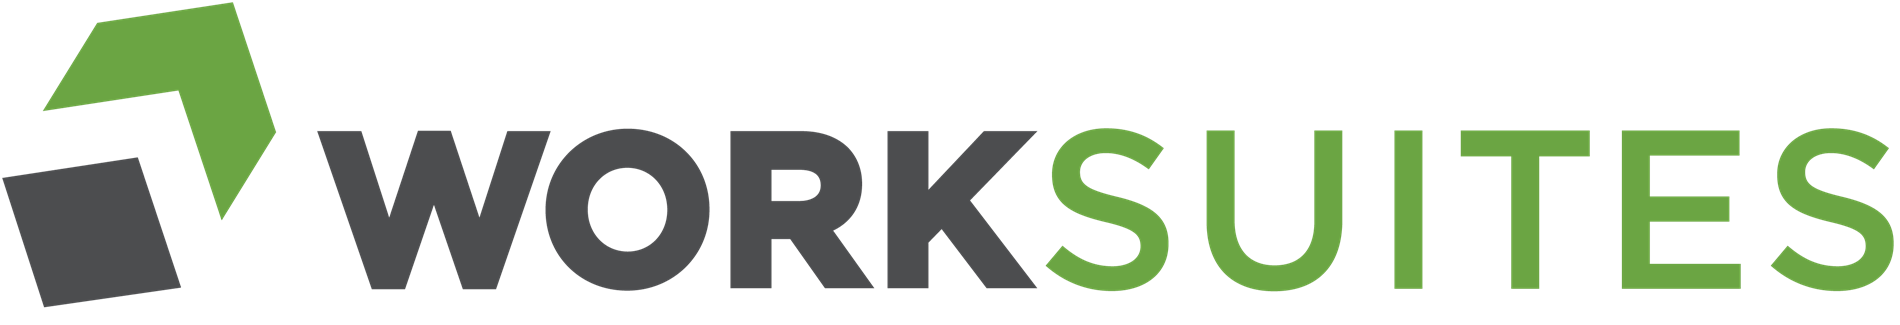 worksuites logo 